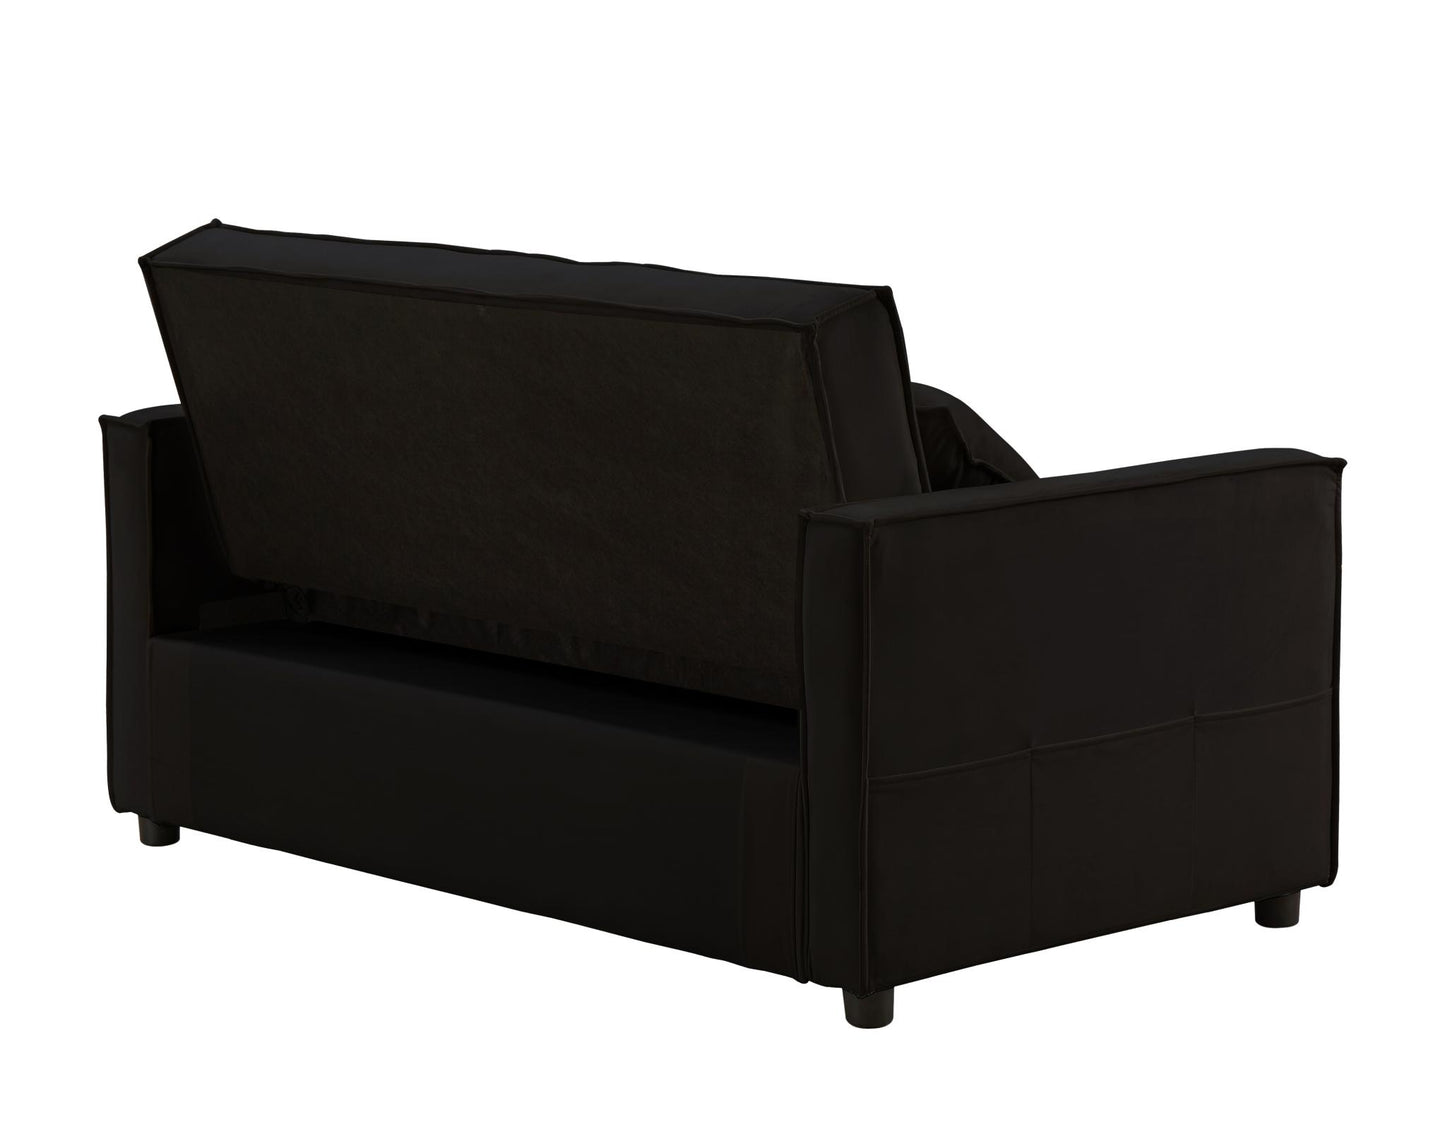 LAST™ Furniture Sofa Bed